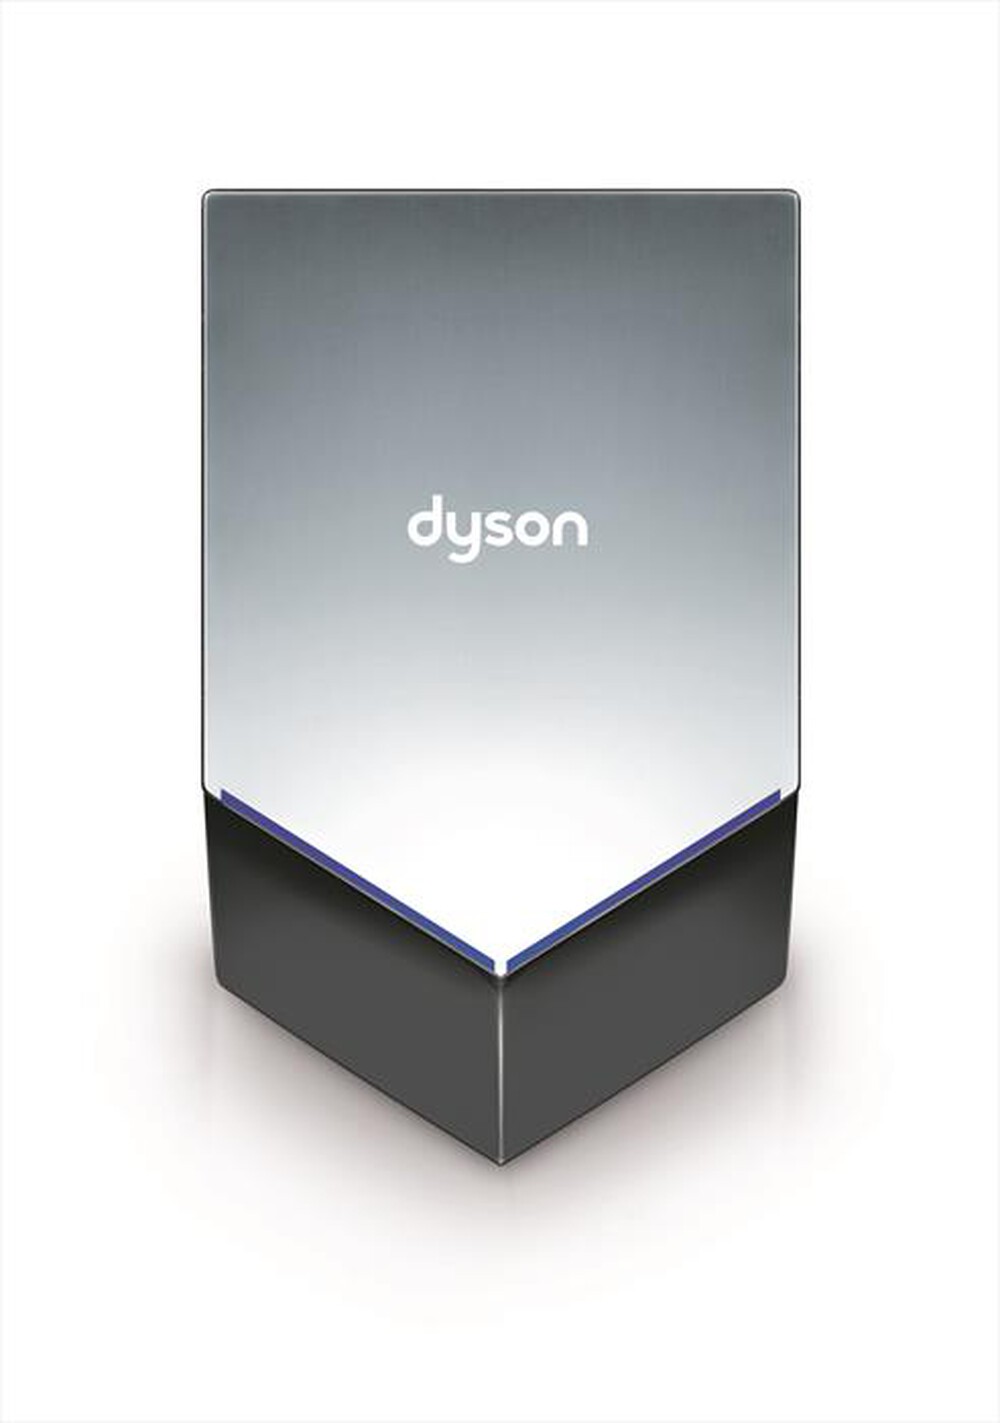 "DYSON - HU02"